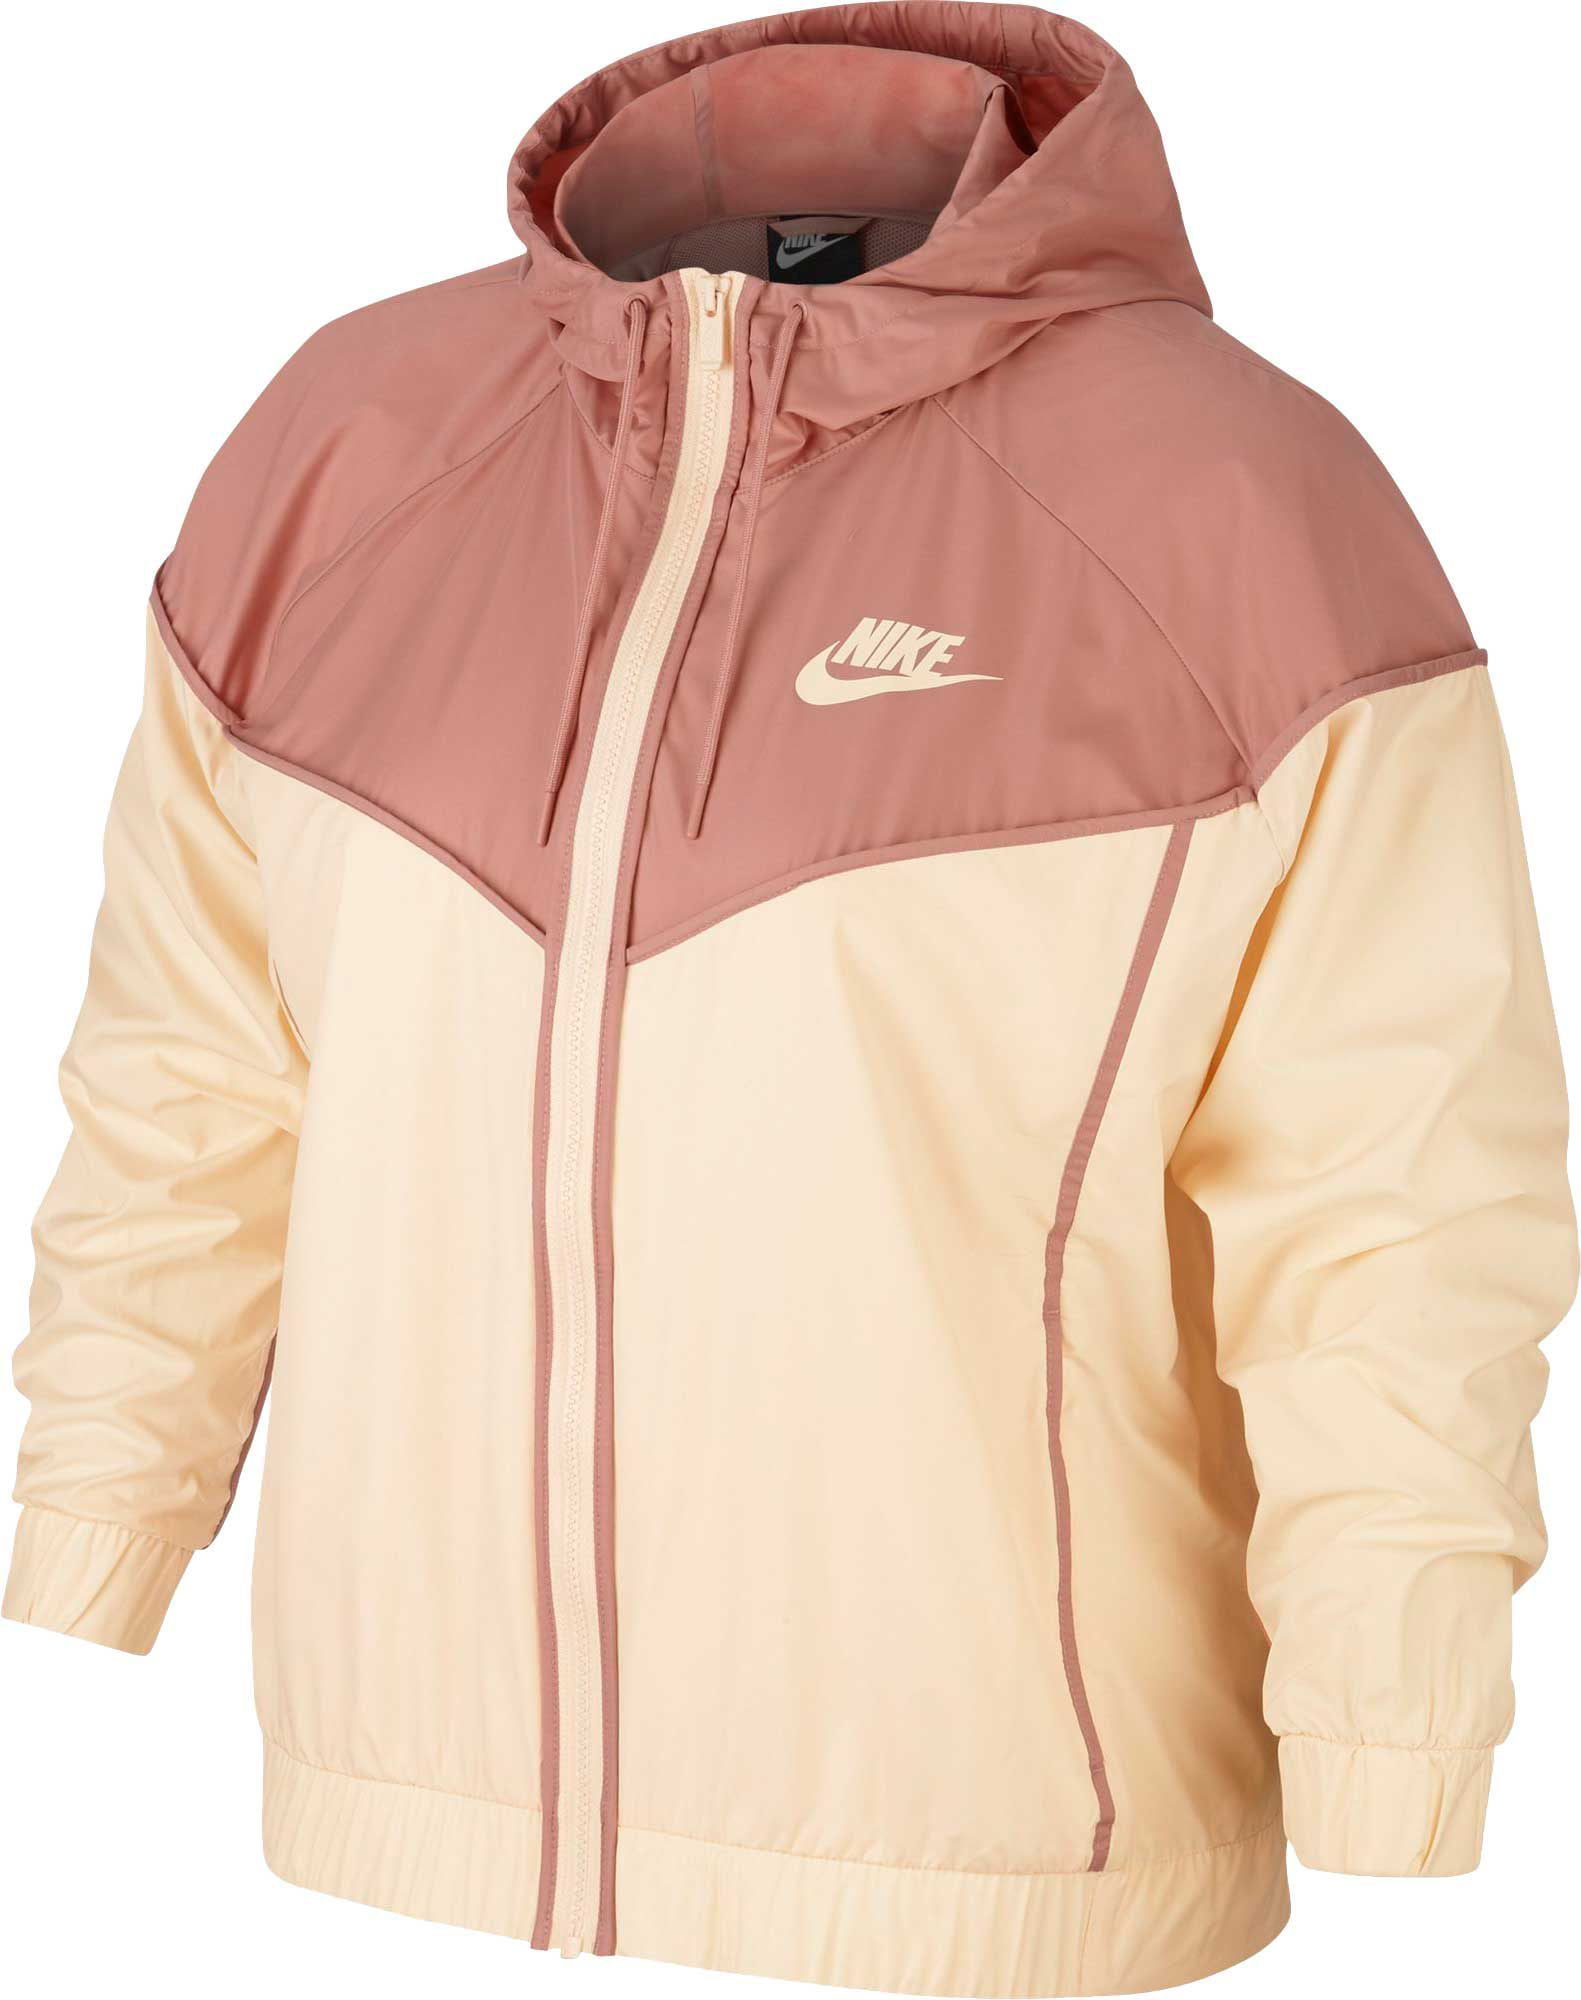 rust pink jacket